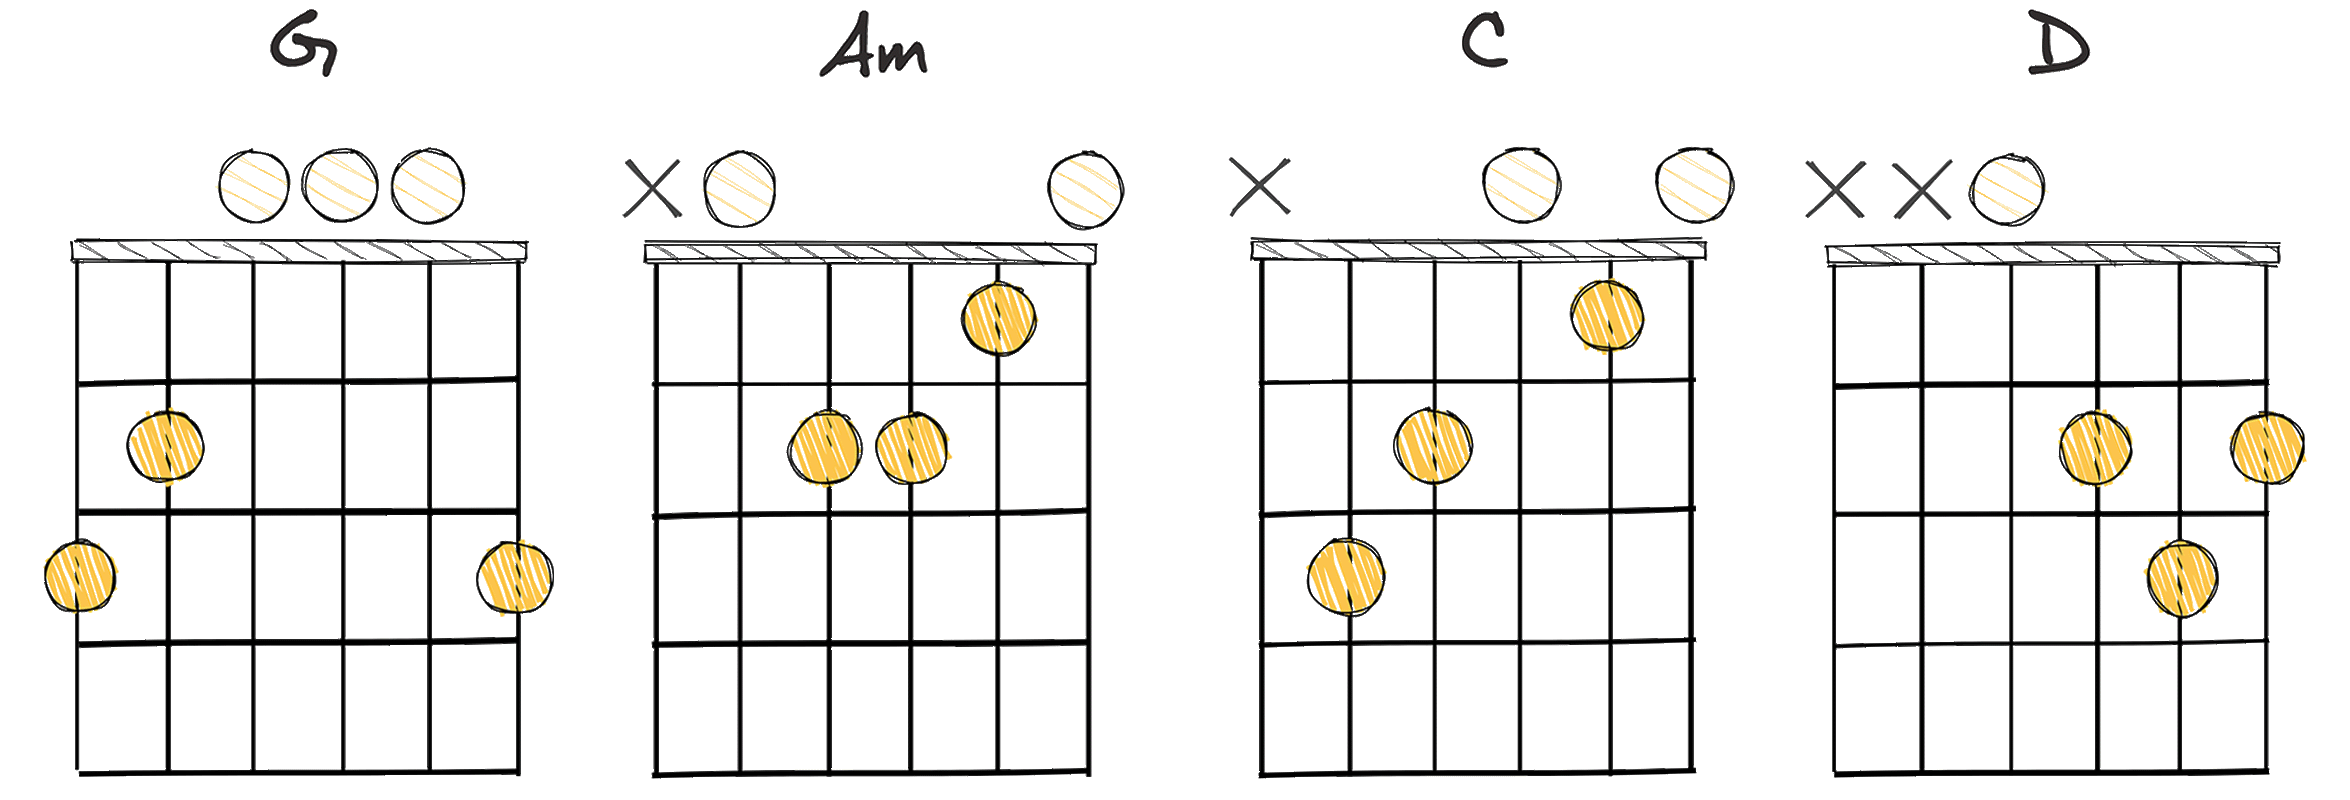 I-ii-IV-V (1-2-4-5) chords diagram